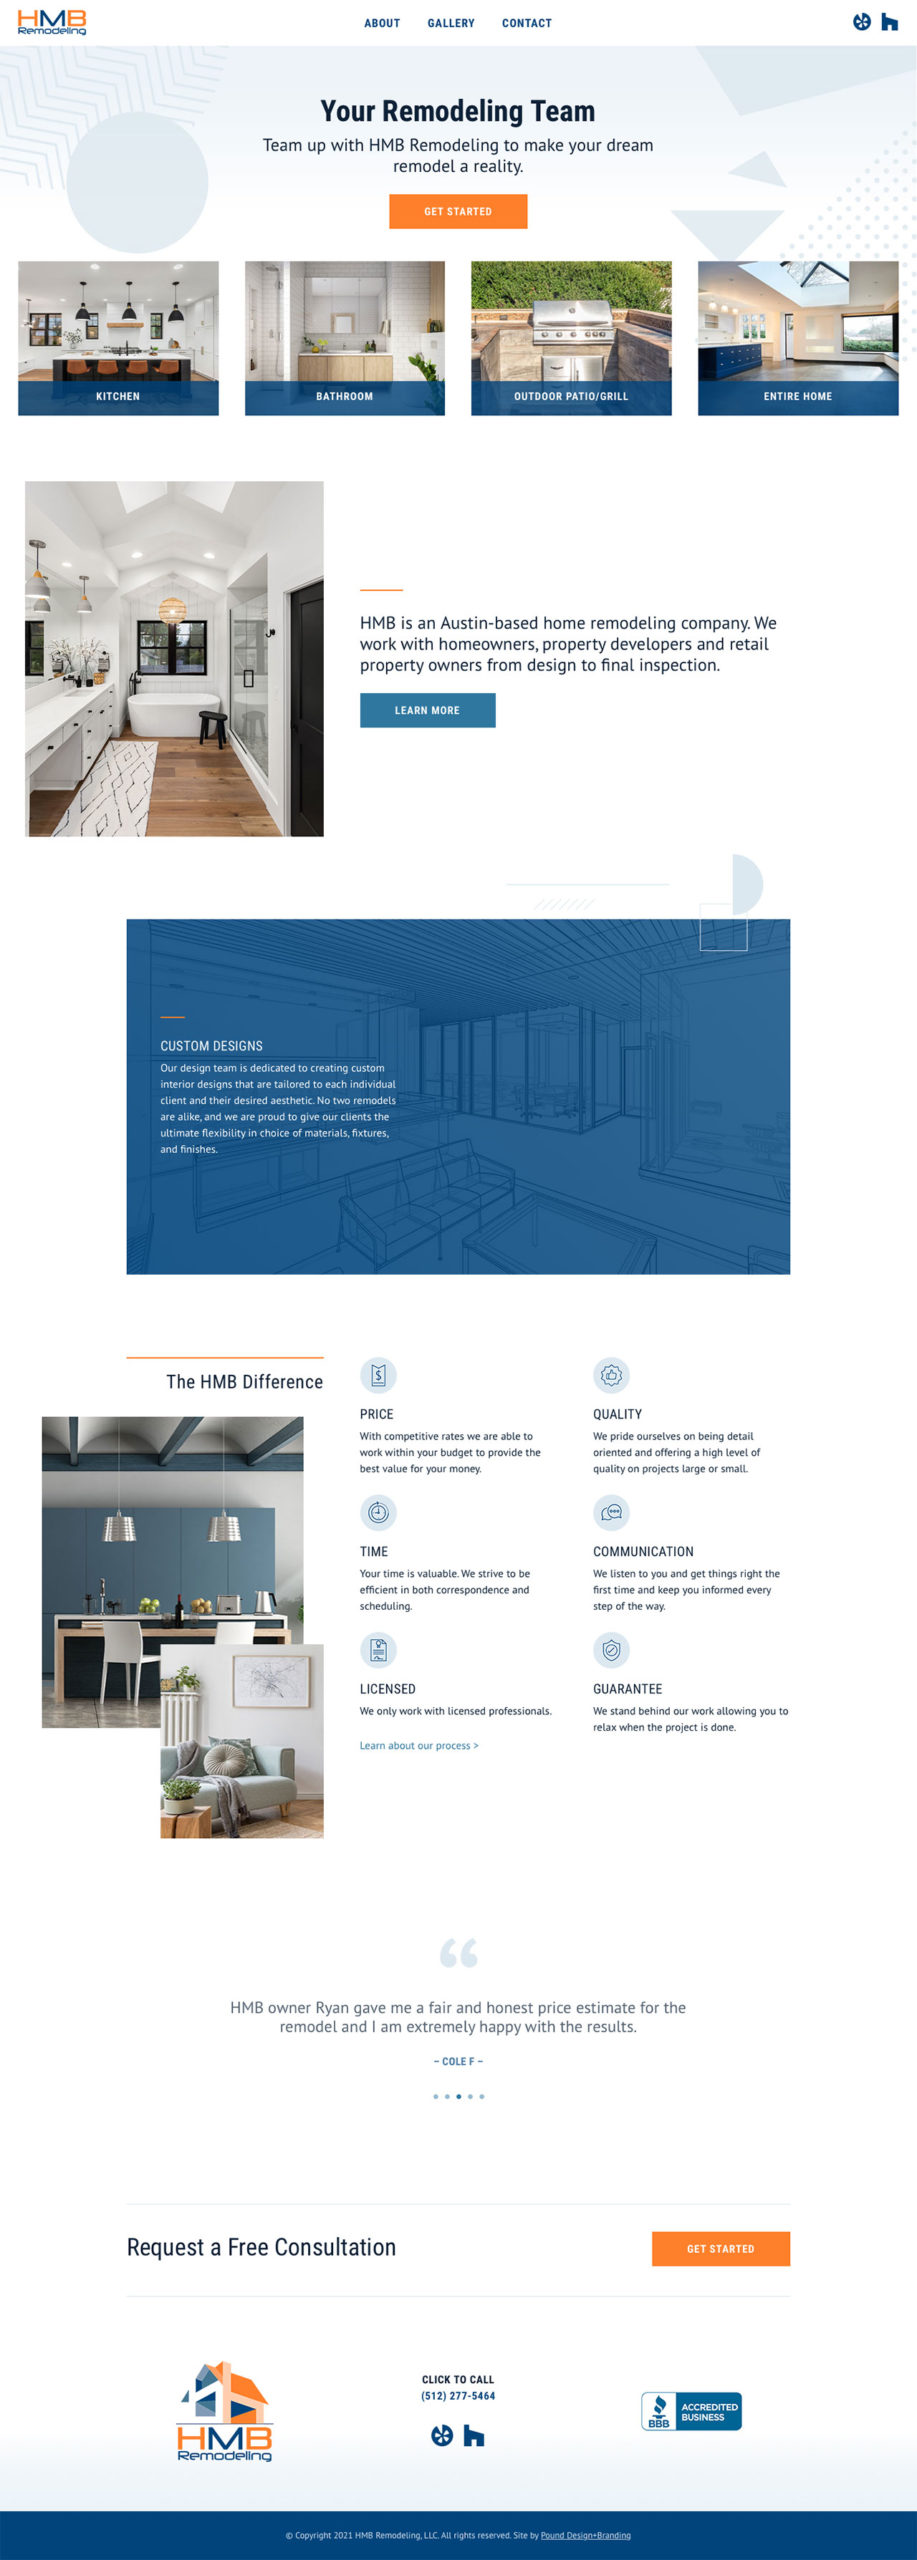 HMB Remodeling website home page design by Pound Design